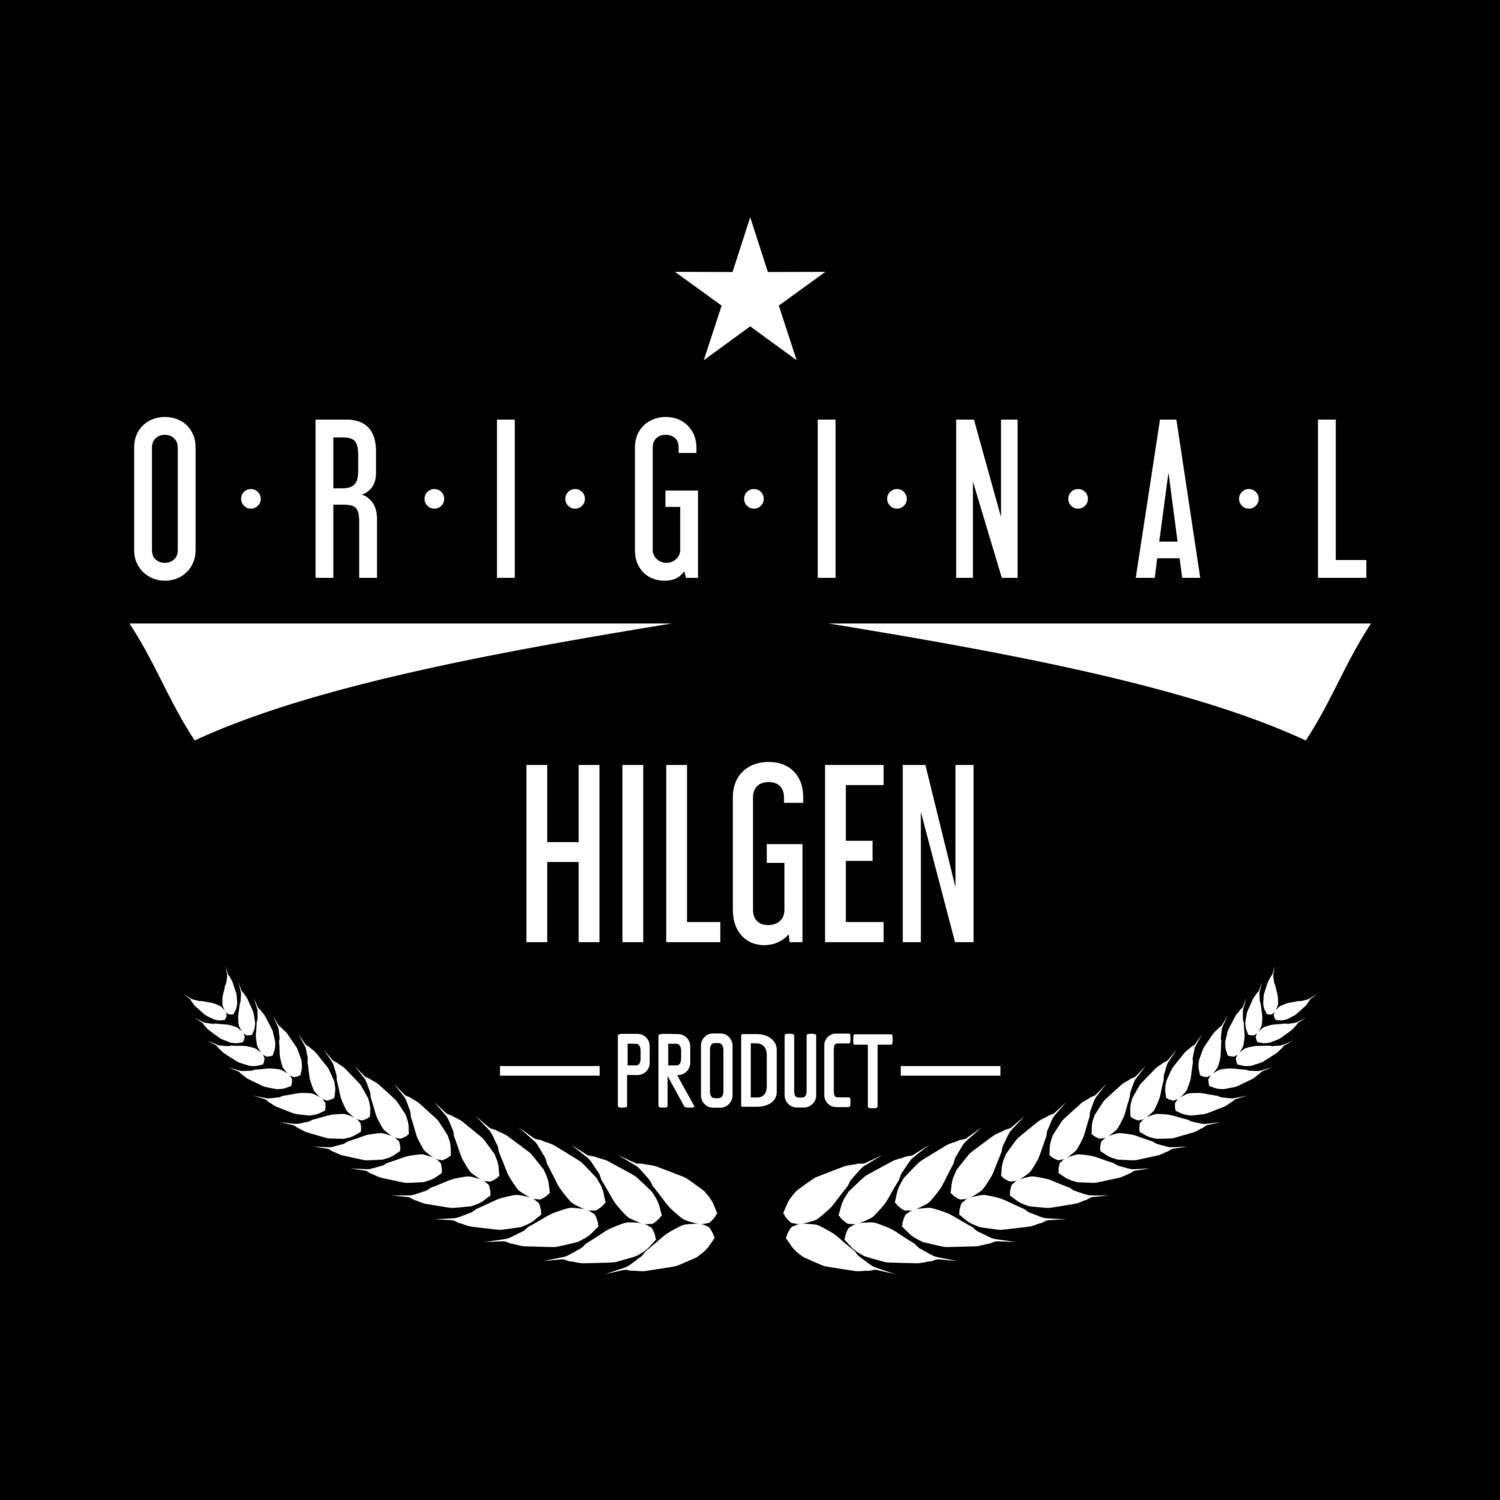 Hilgen T-Shirt »Original Product«